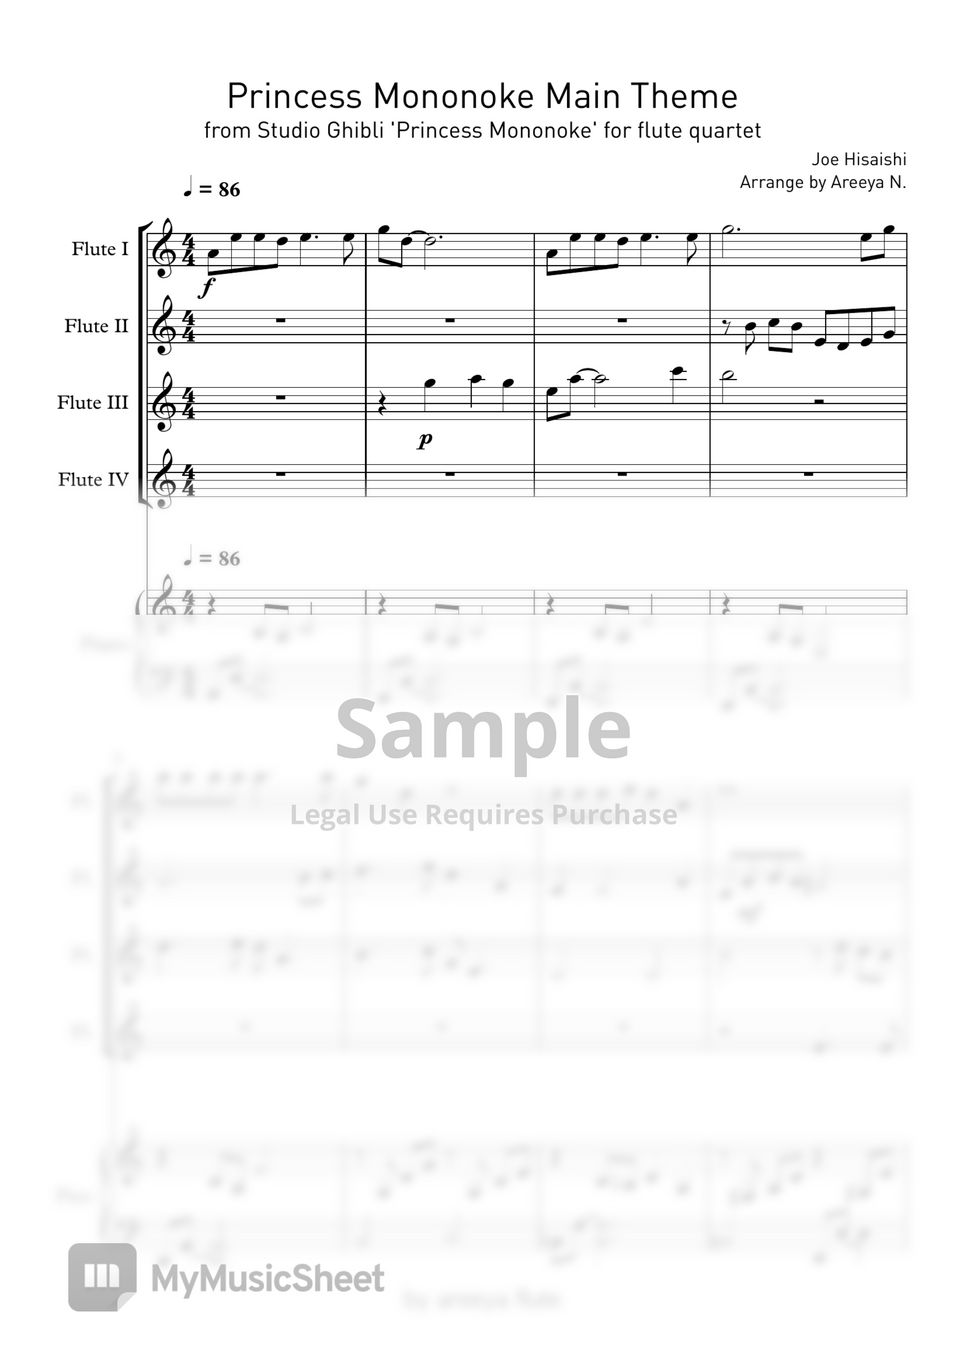 Joe Hisaishi - Princess Mononoke Main Theme (for 4 flutes) by areeya flute